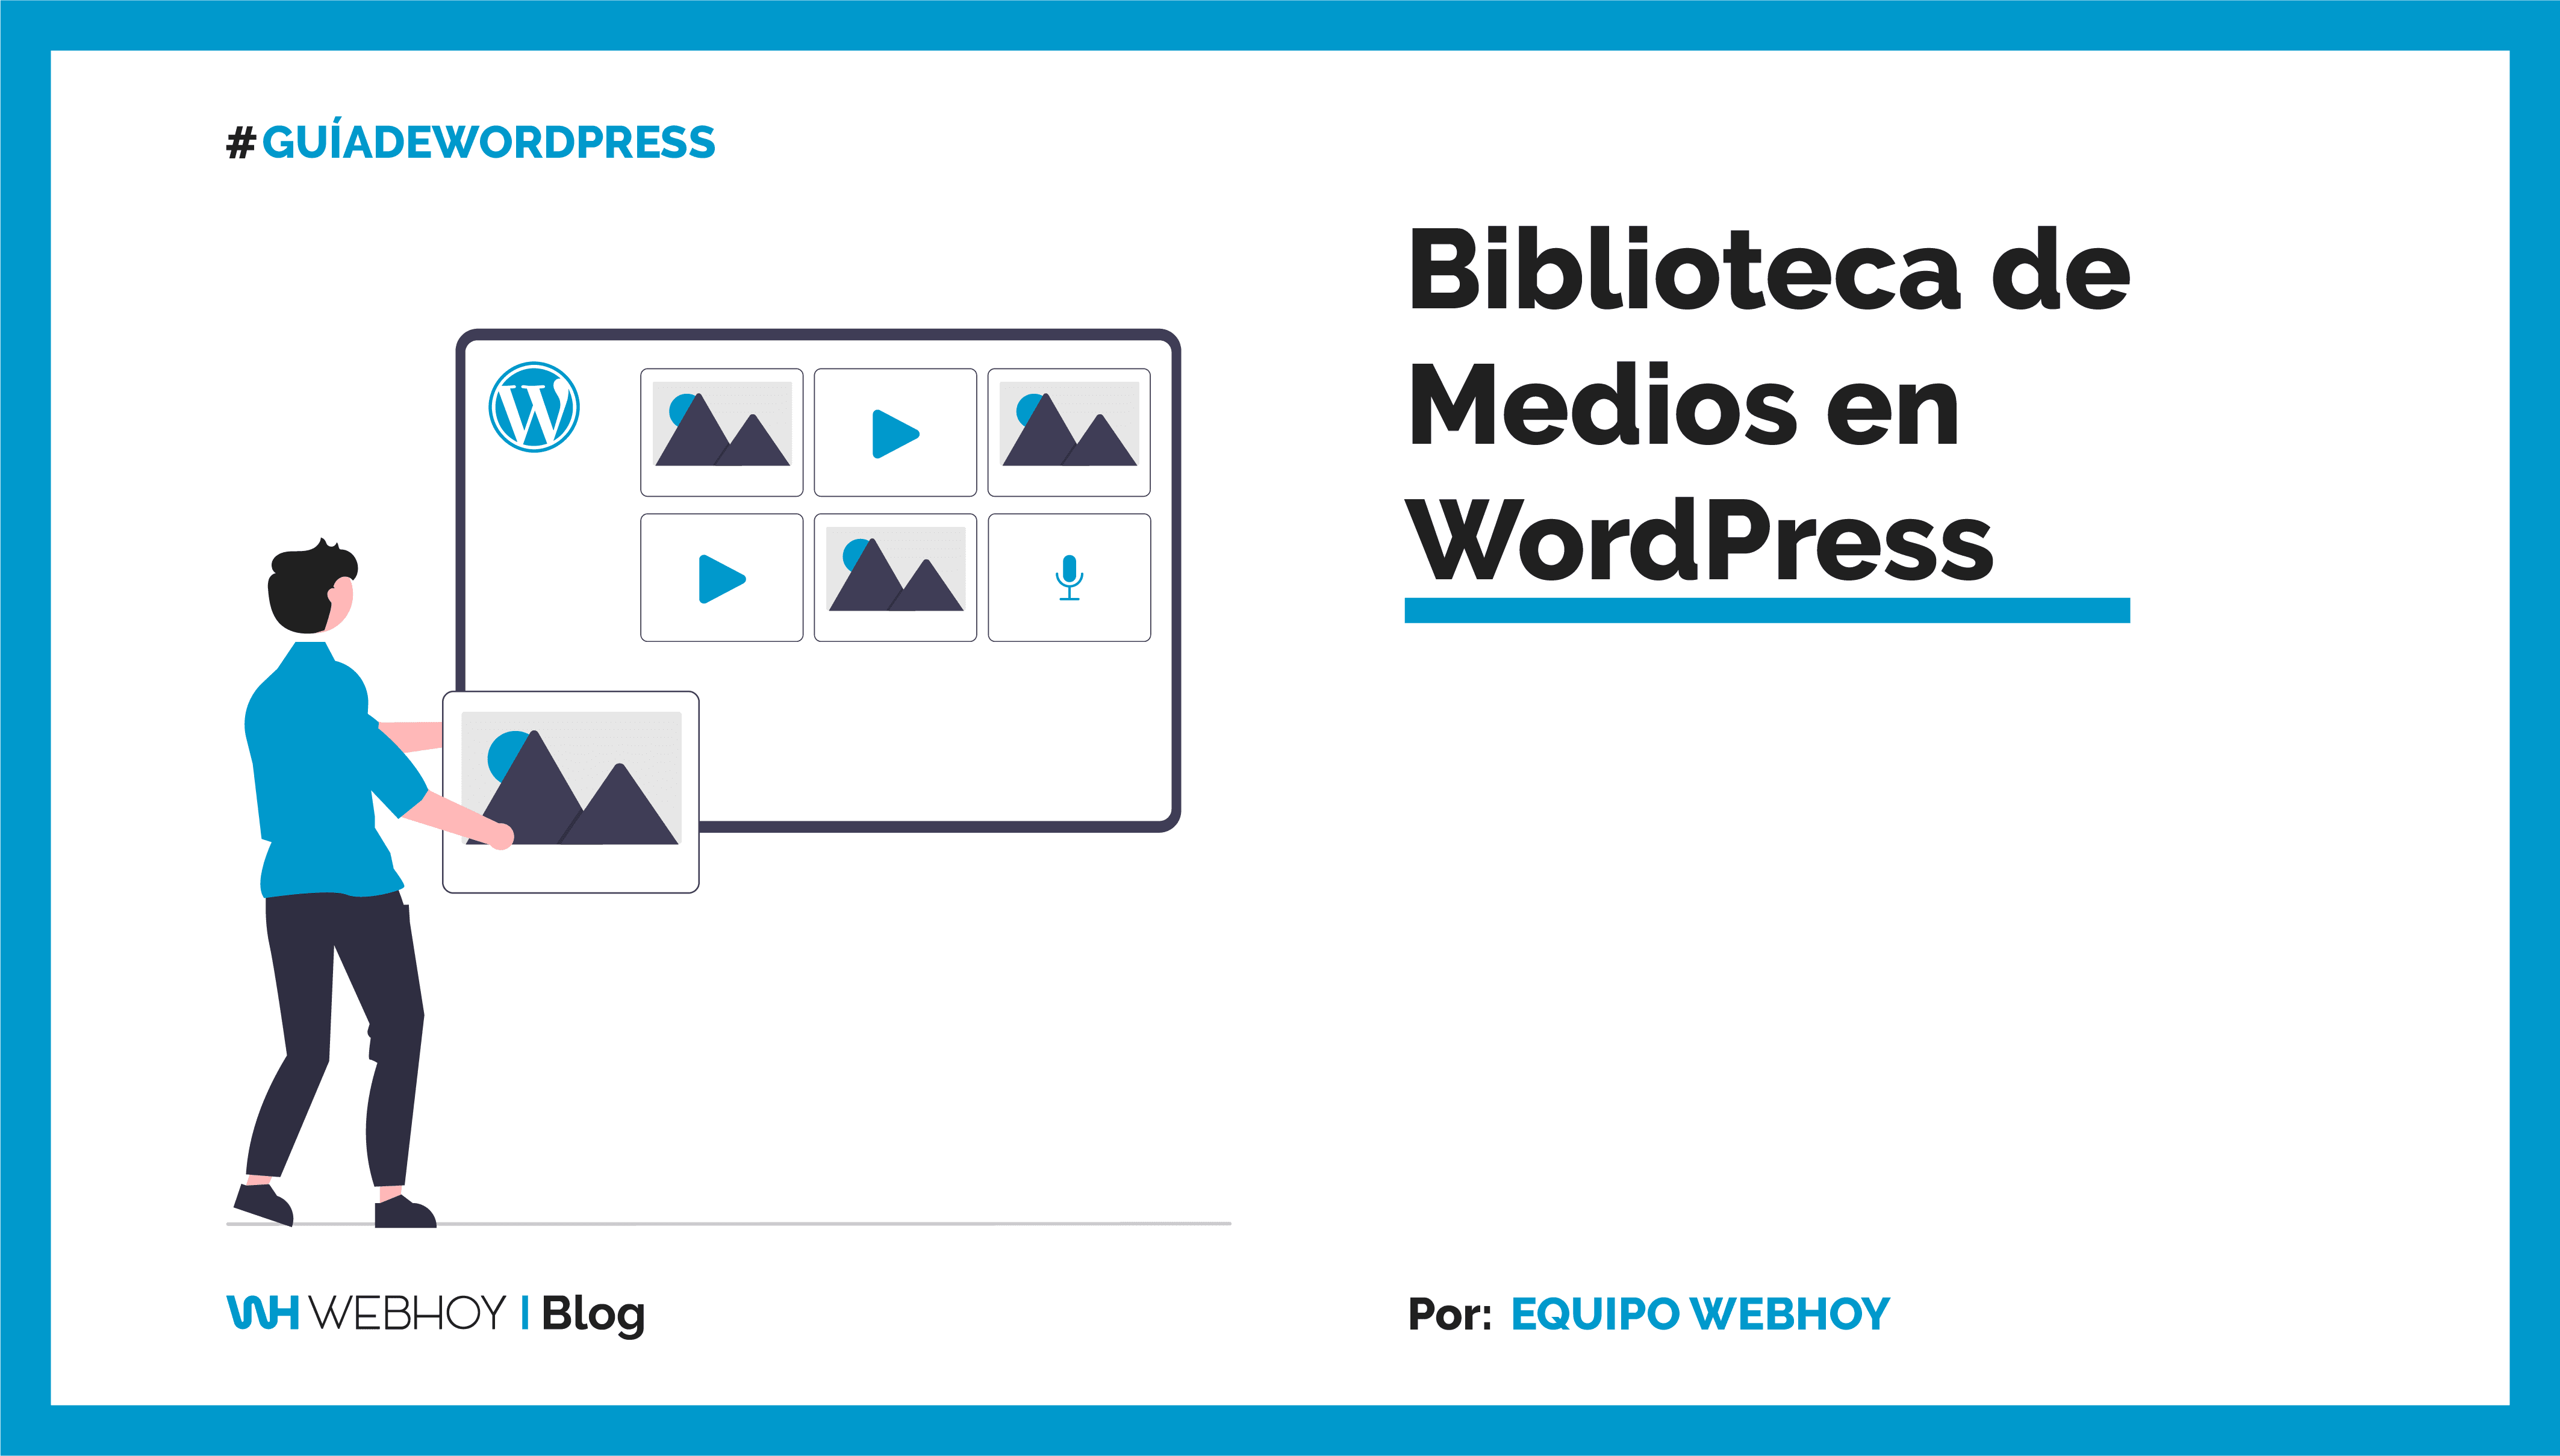 Biblioteca de Medios en WordPress